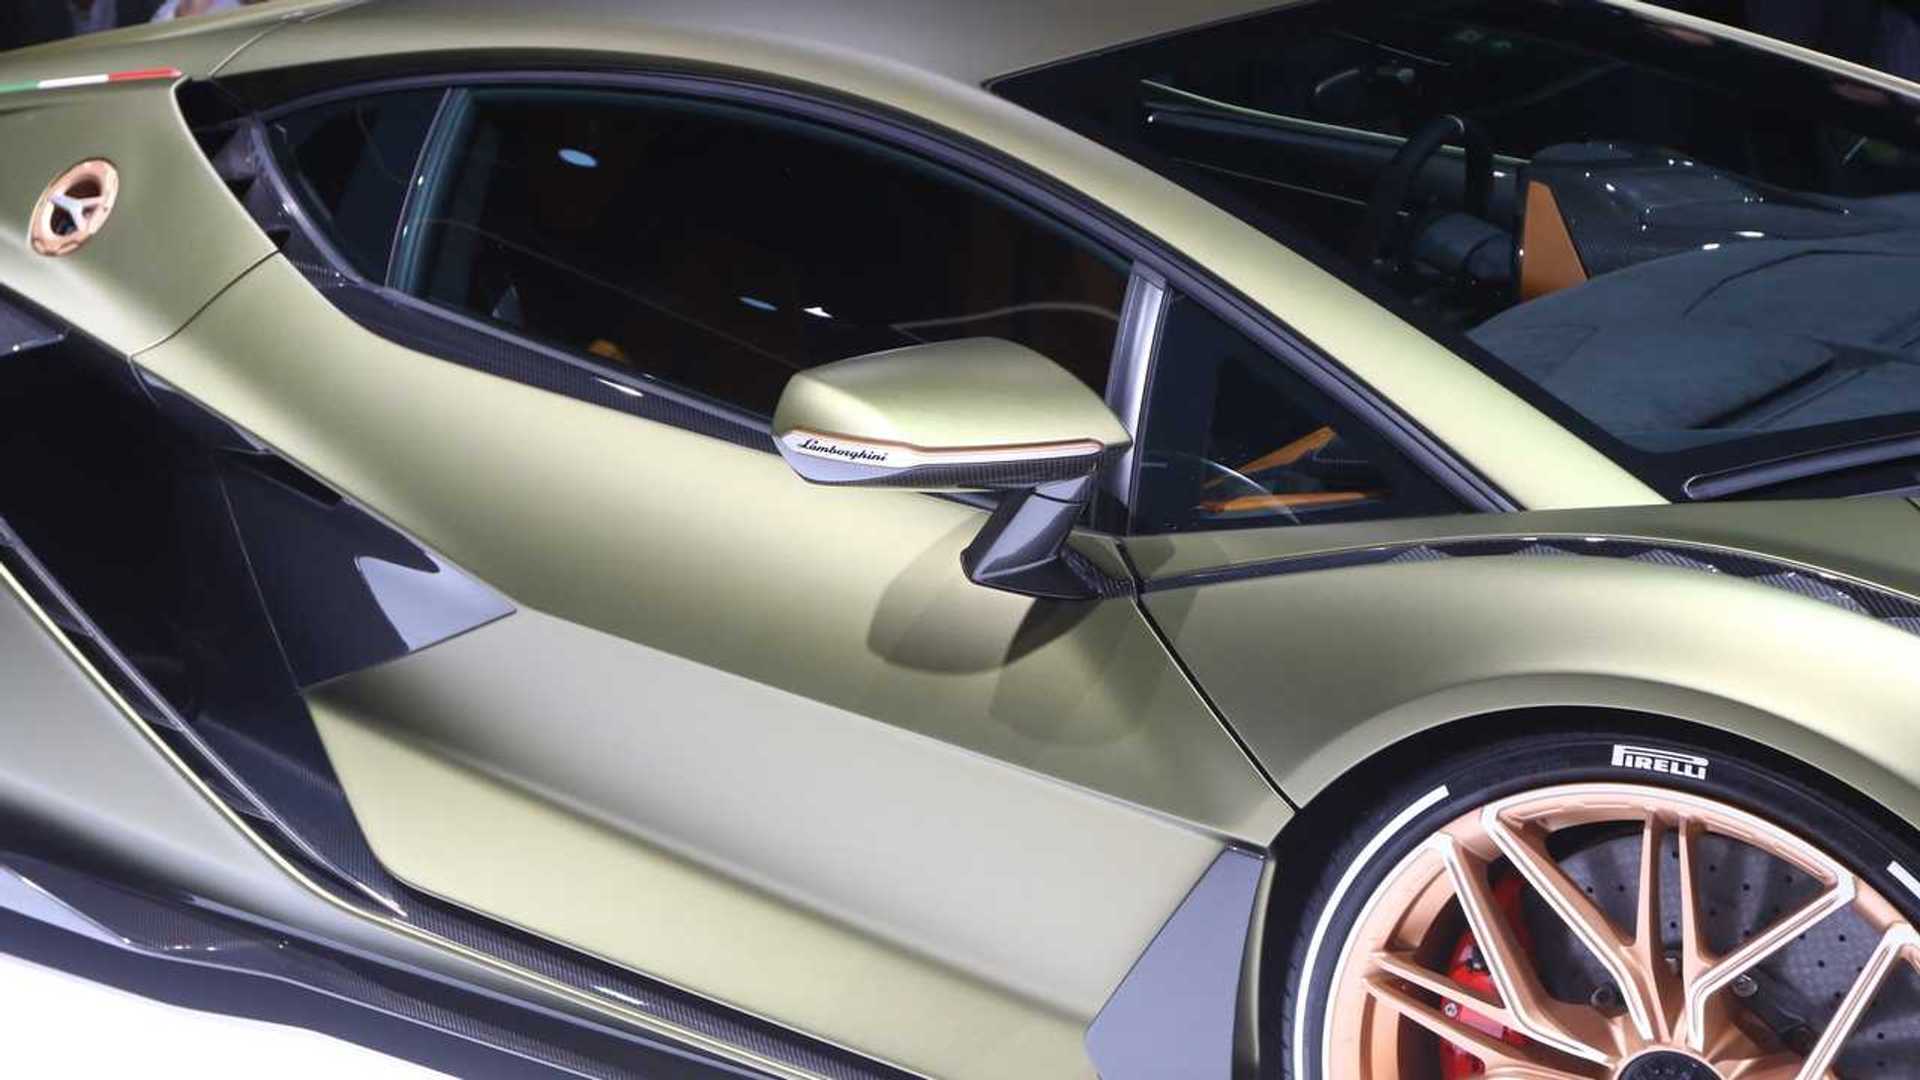 Lamborghini sian fkp 37 представлен на автосалоне во франкфурте